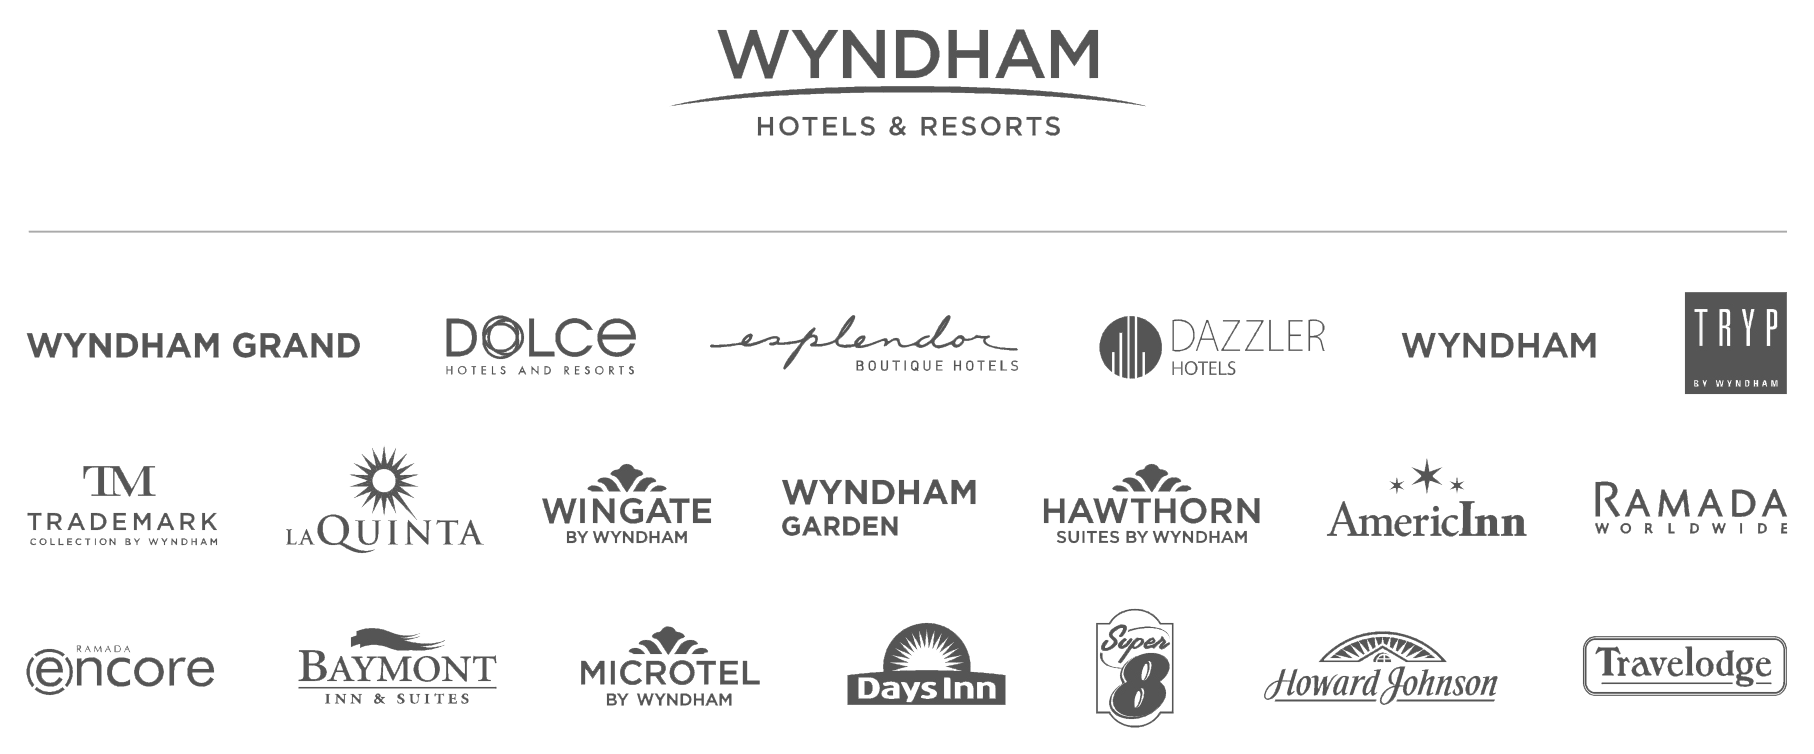 Wyndham Brands